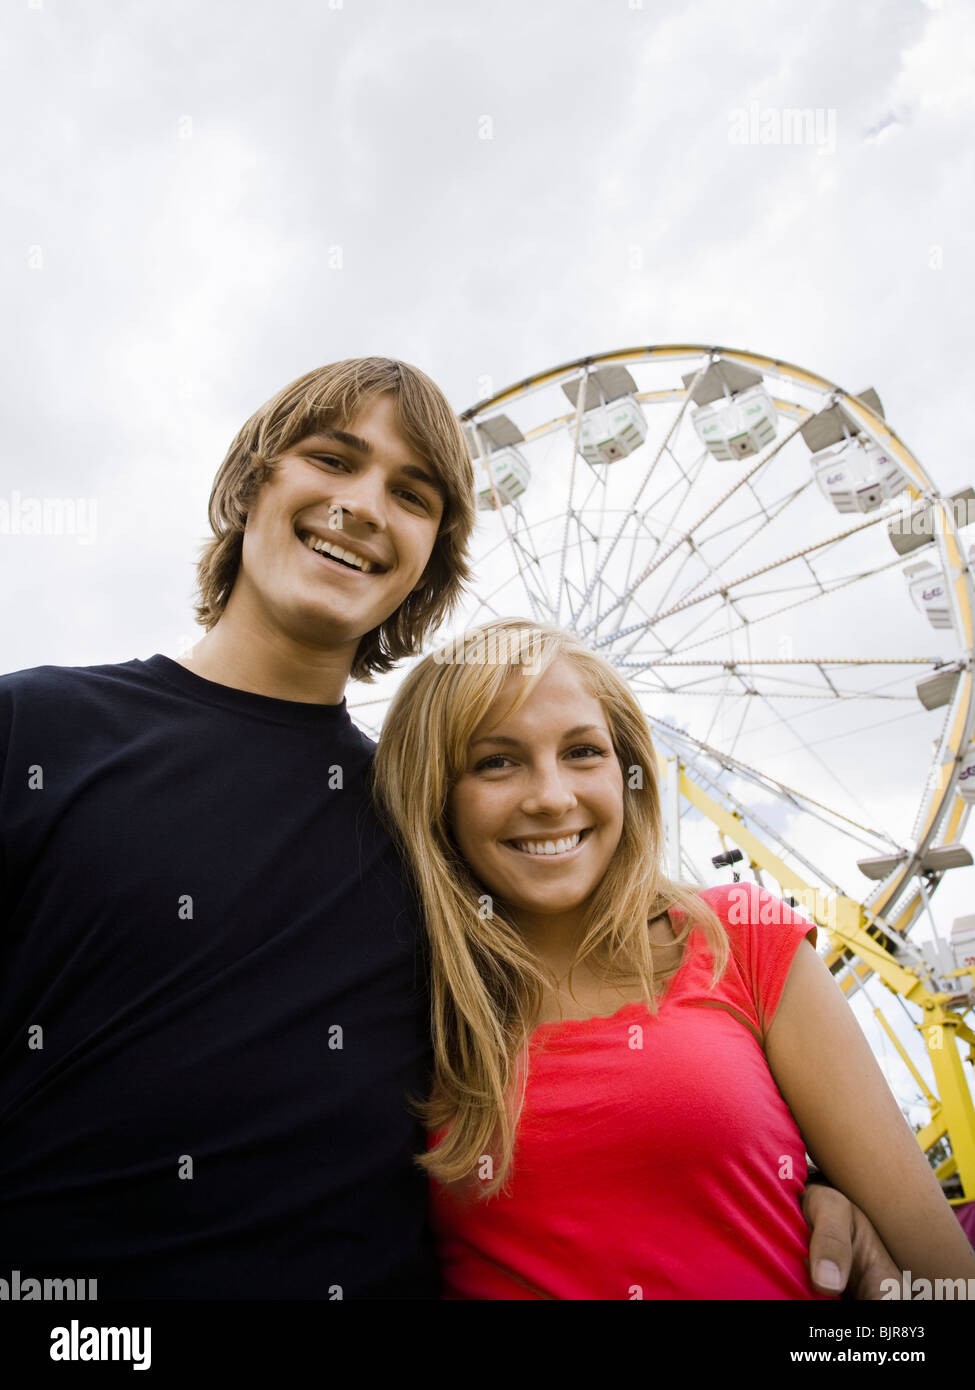 young couple at an amusement park Stock Photo